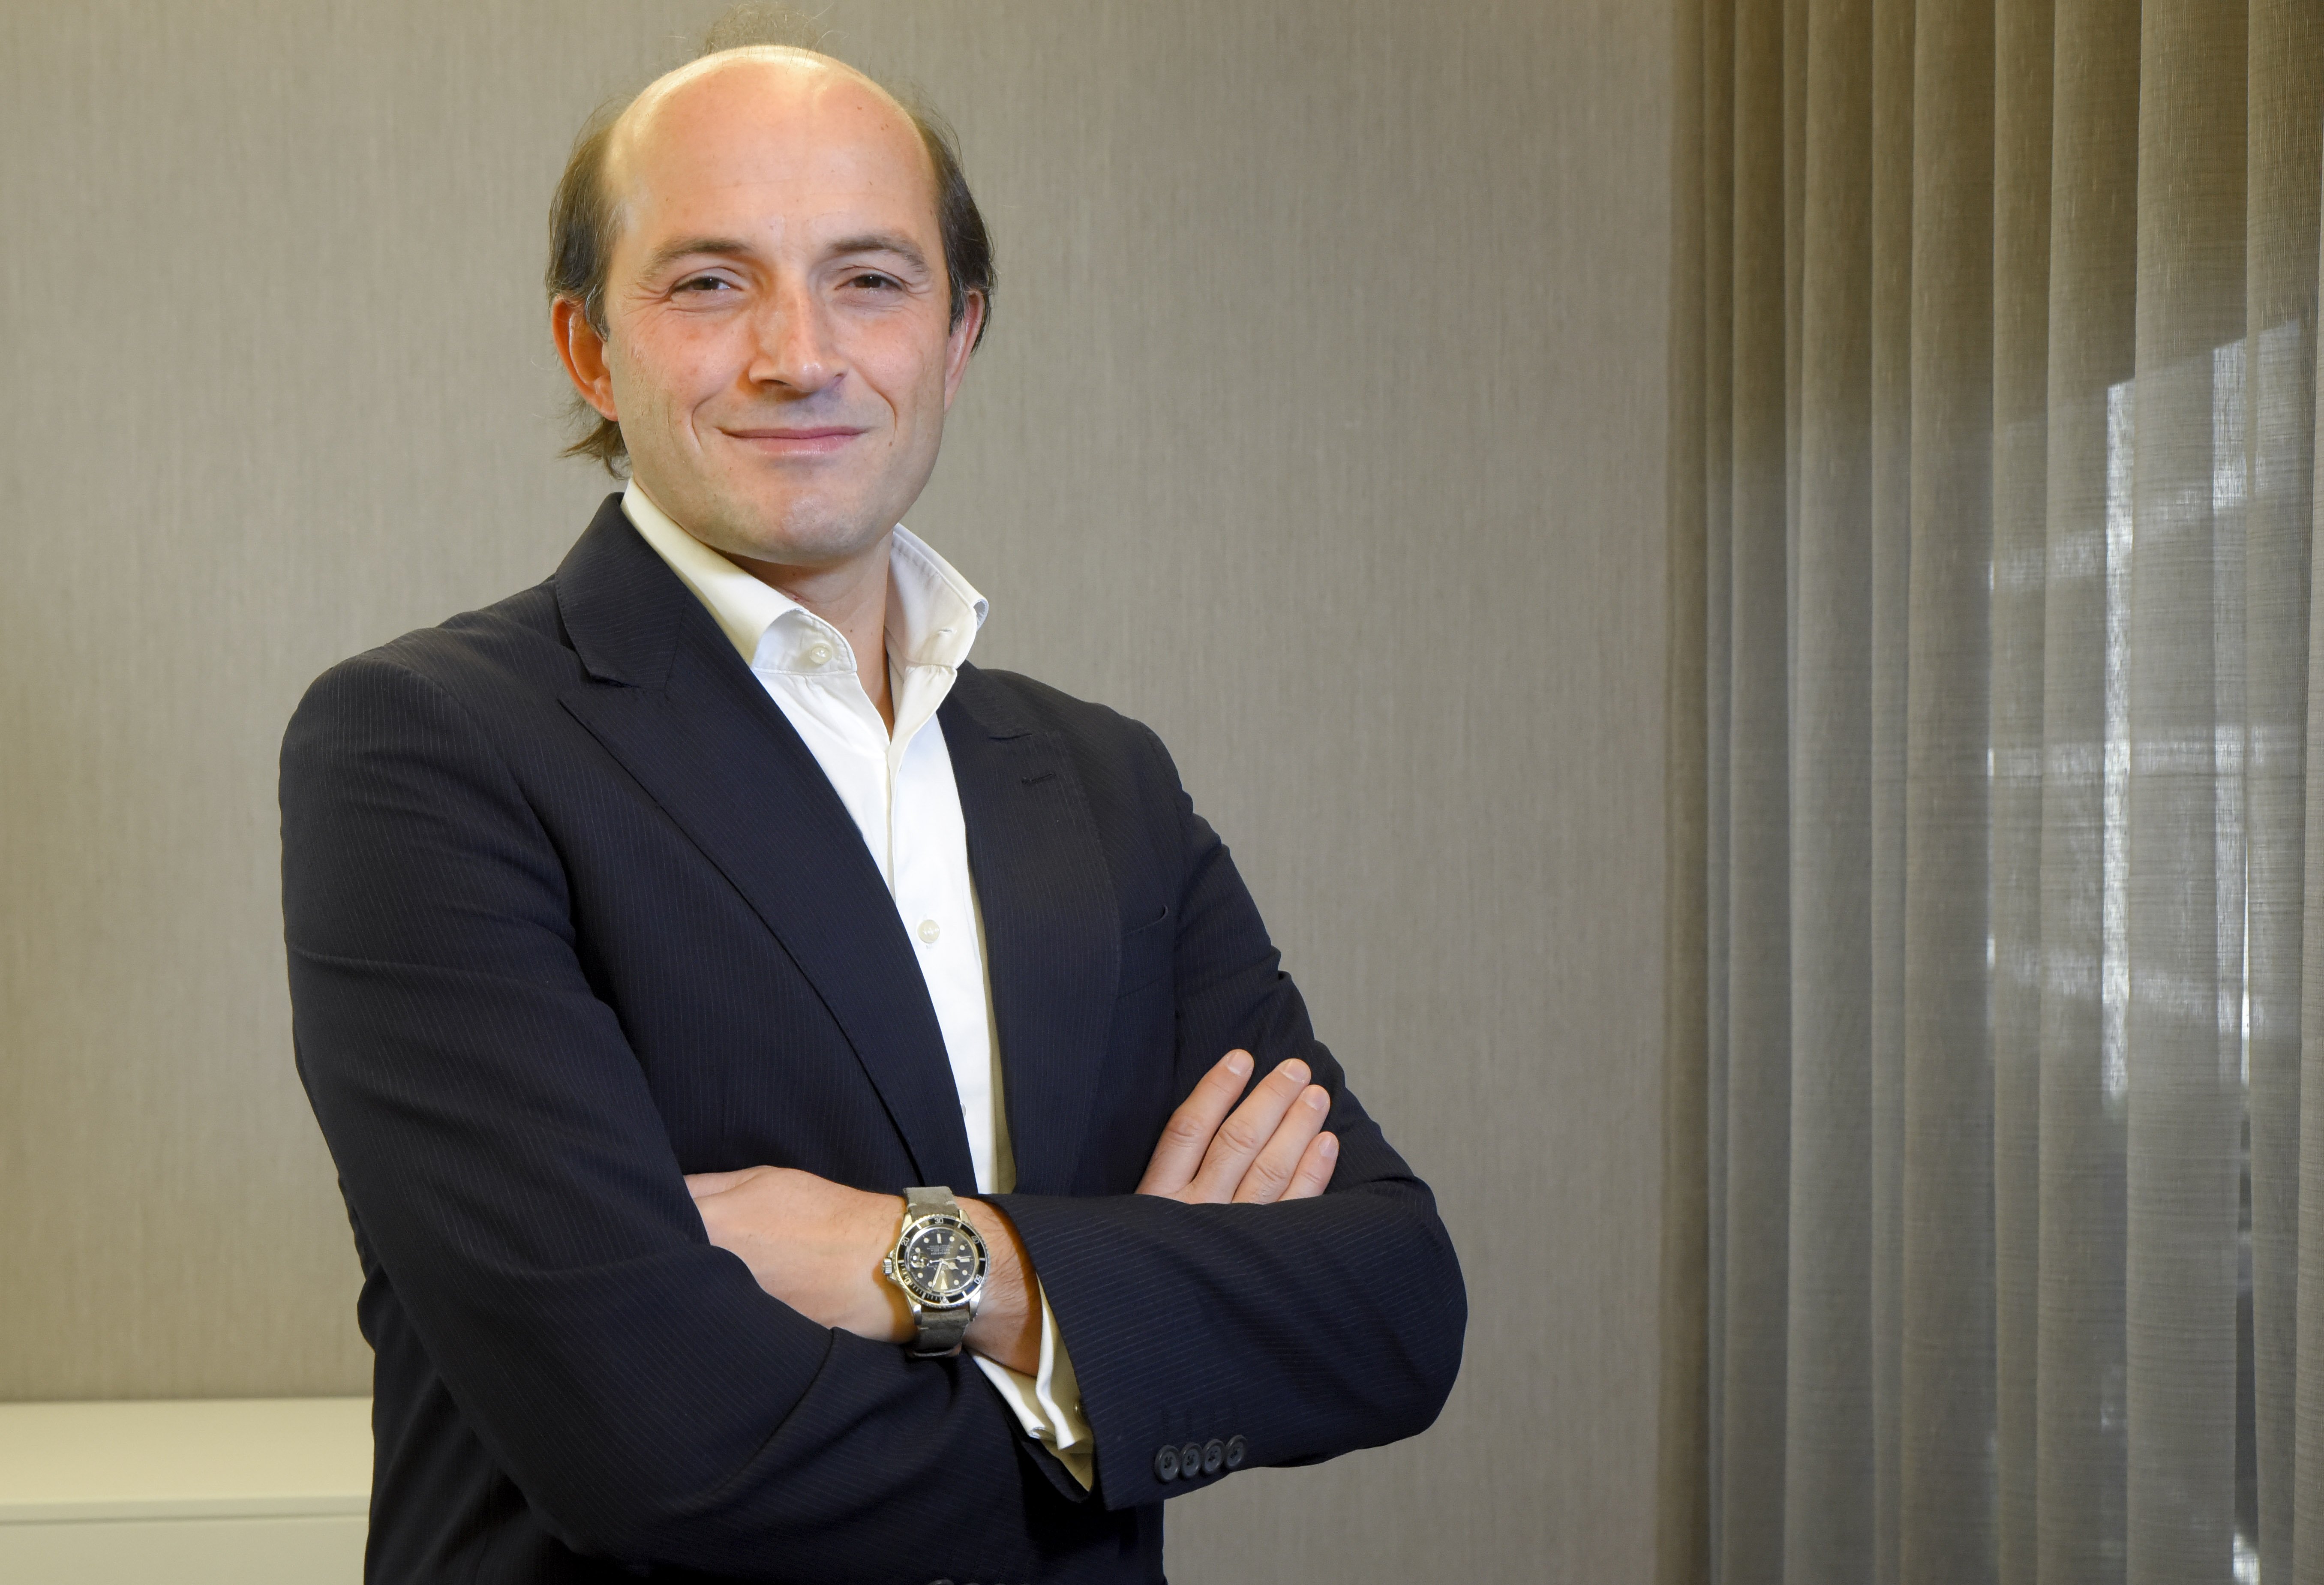 José Diogo Araújo e Silva is the new CFO of the MDS Group